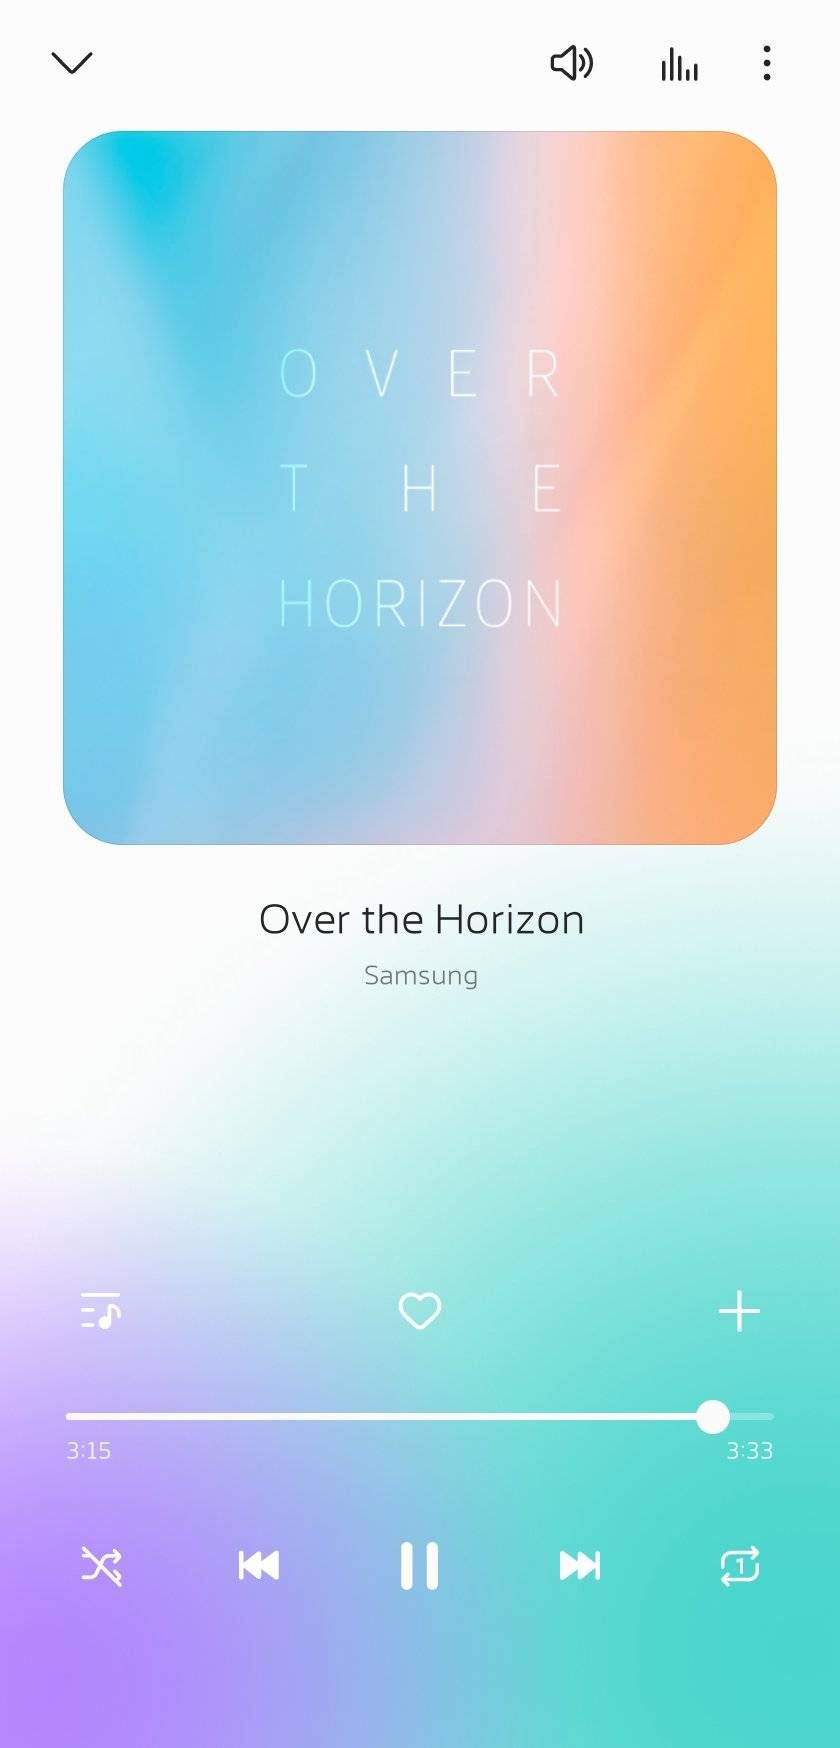 Over the Horizon 2021 - Samsung Members